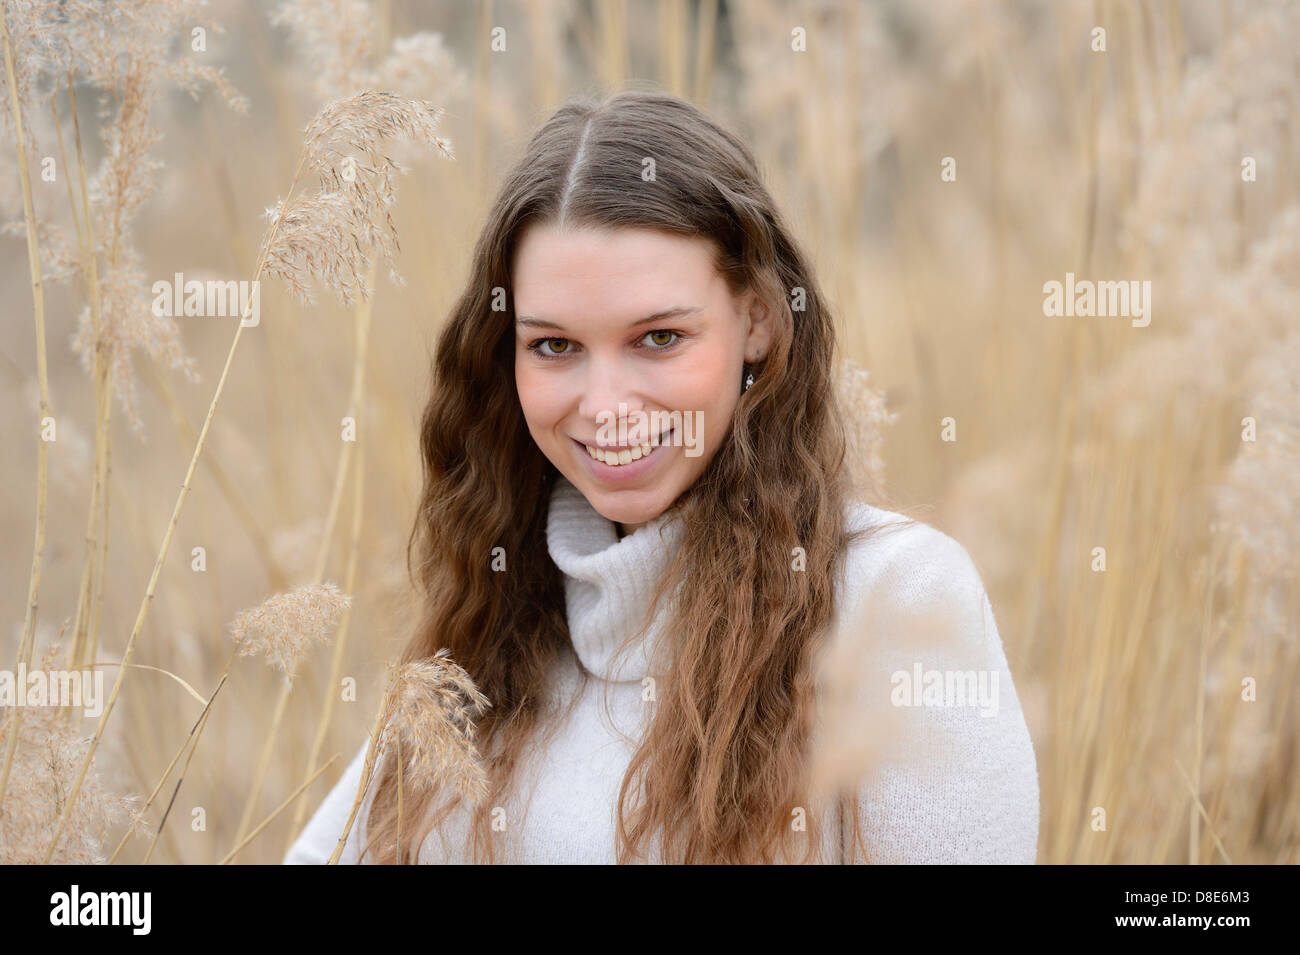 Smiling young woman outdoors, portrait Banque D'Images